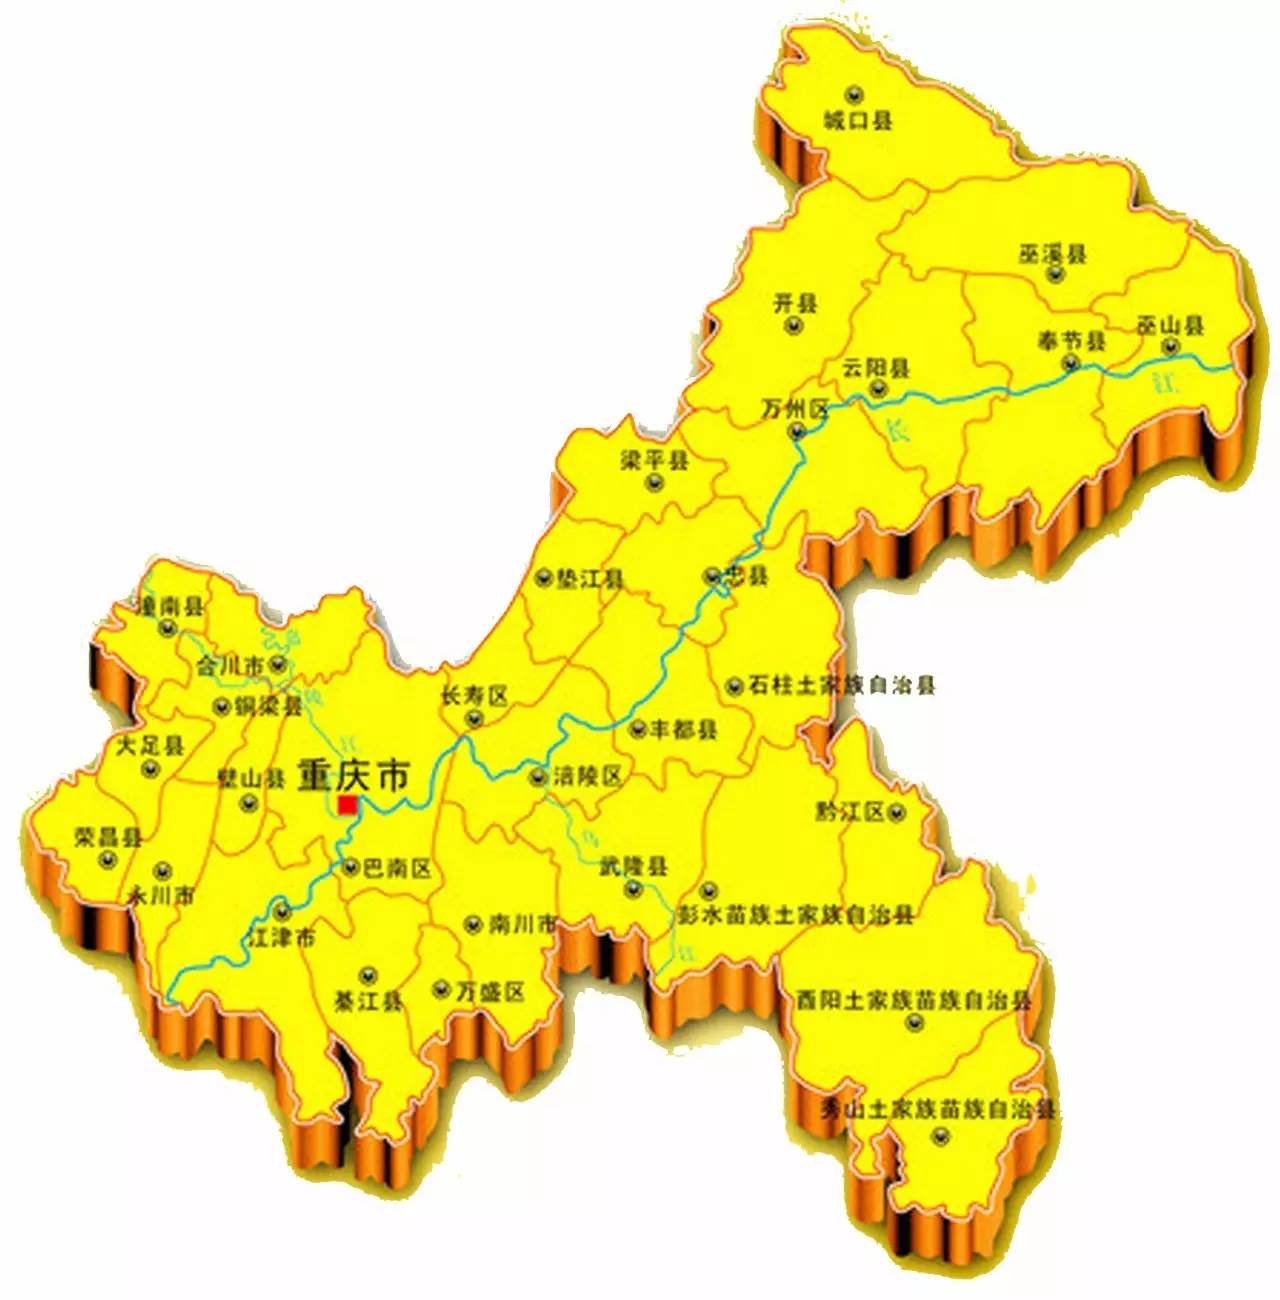 map of sichuan province四川省&重庆市地图